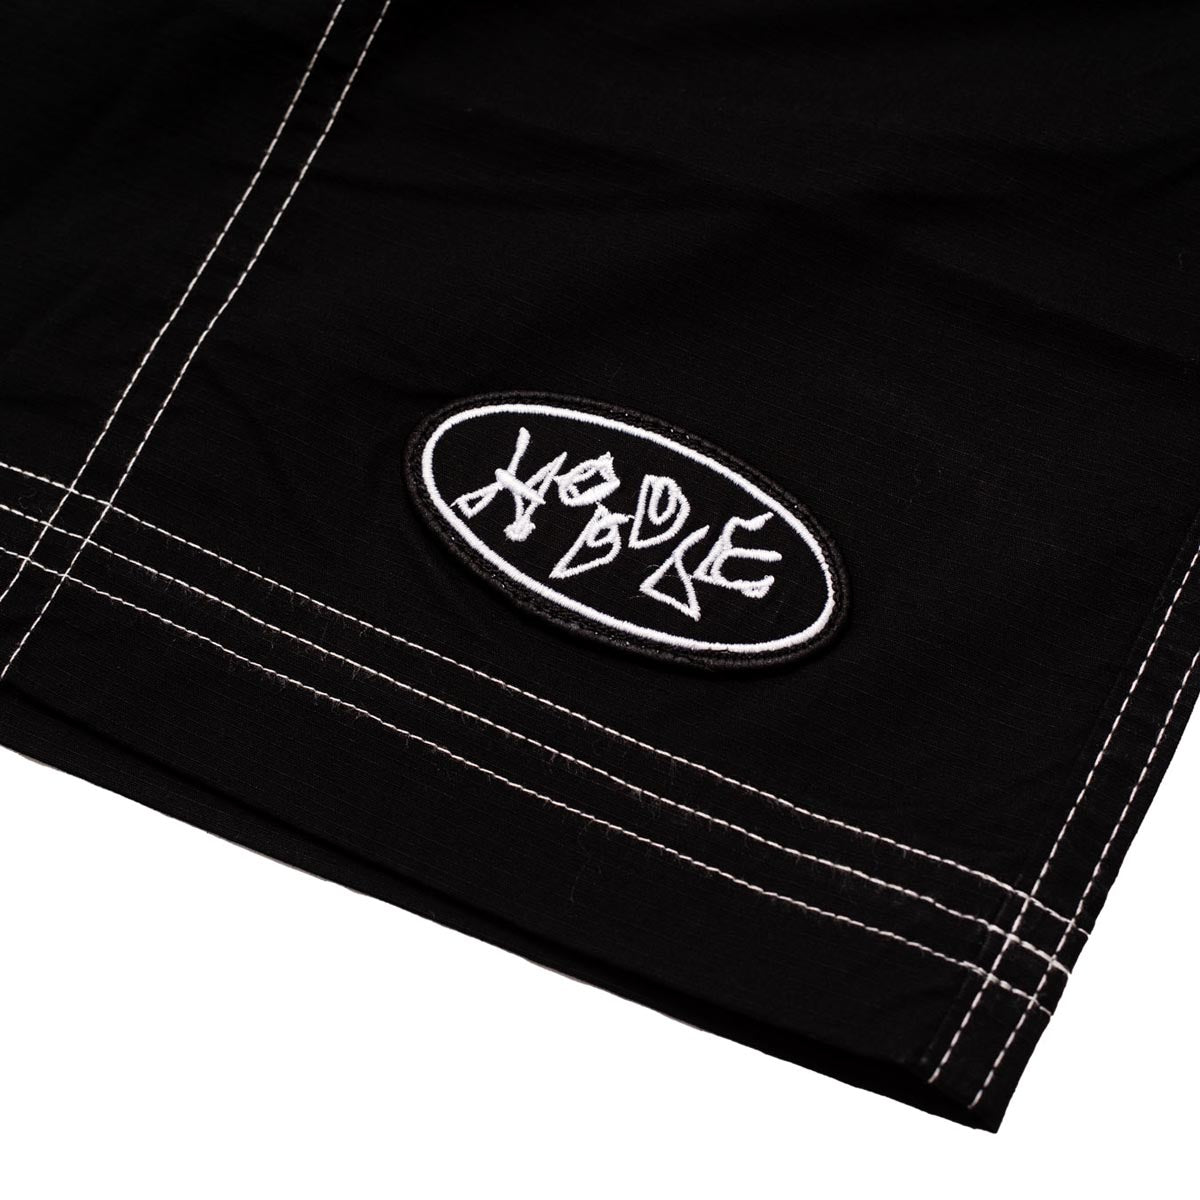 Hoddle Trifid Rip Stop Shorts - Black image 3